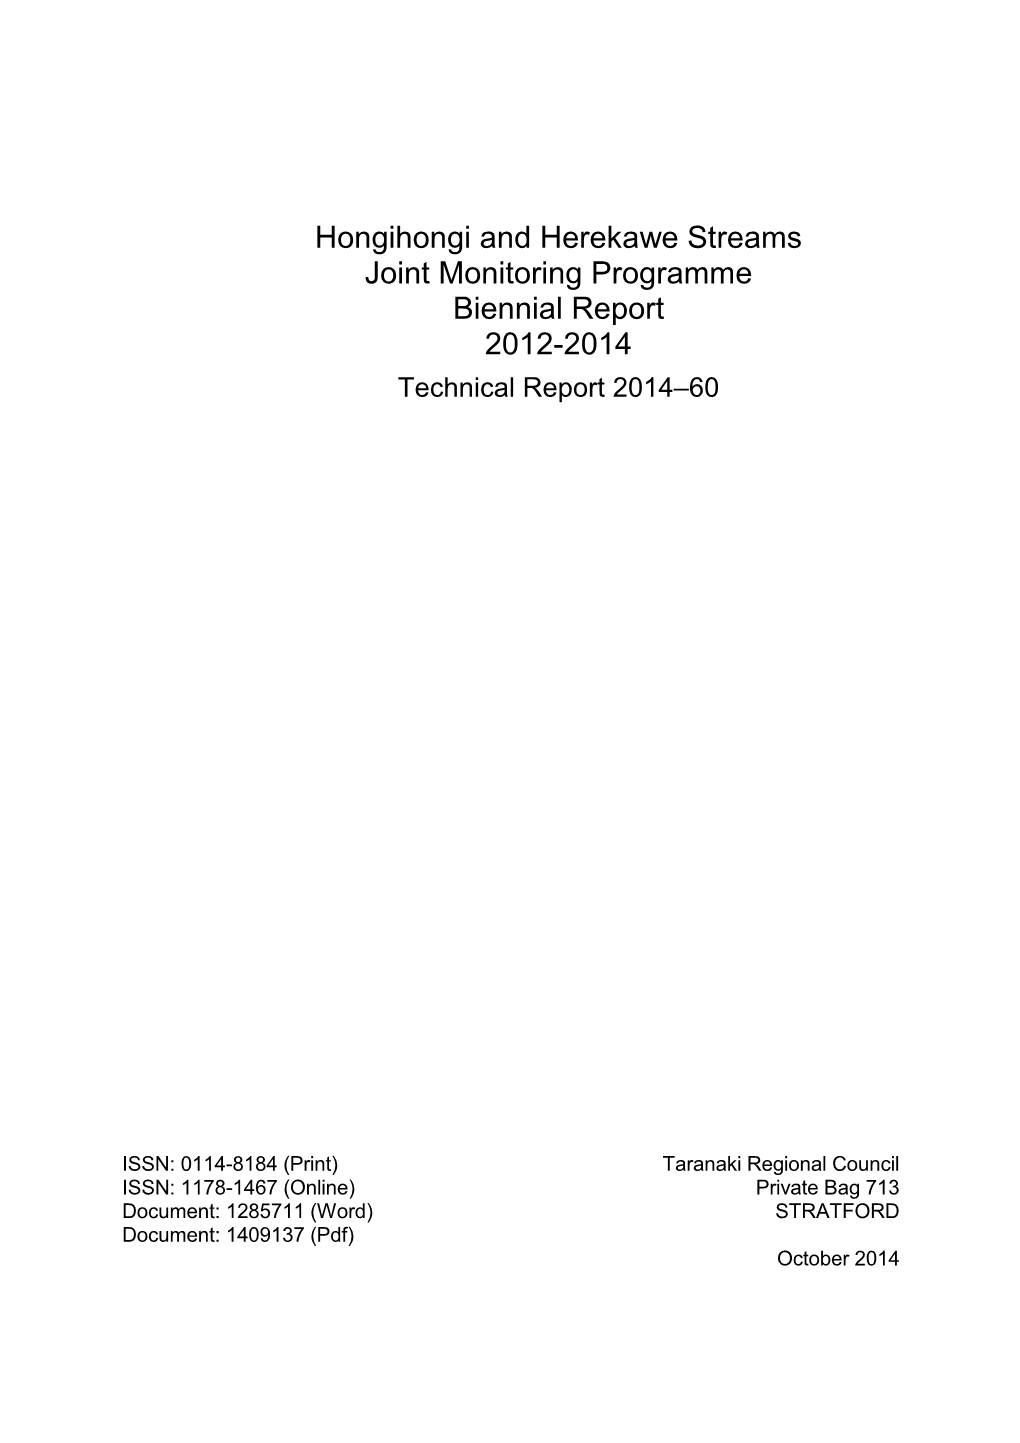 Hongihongi and Herekawe Streams Monitoring Report